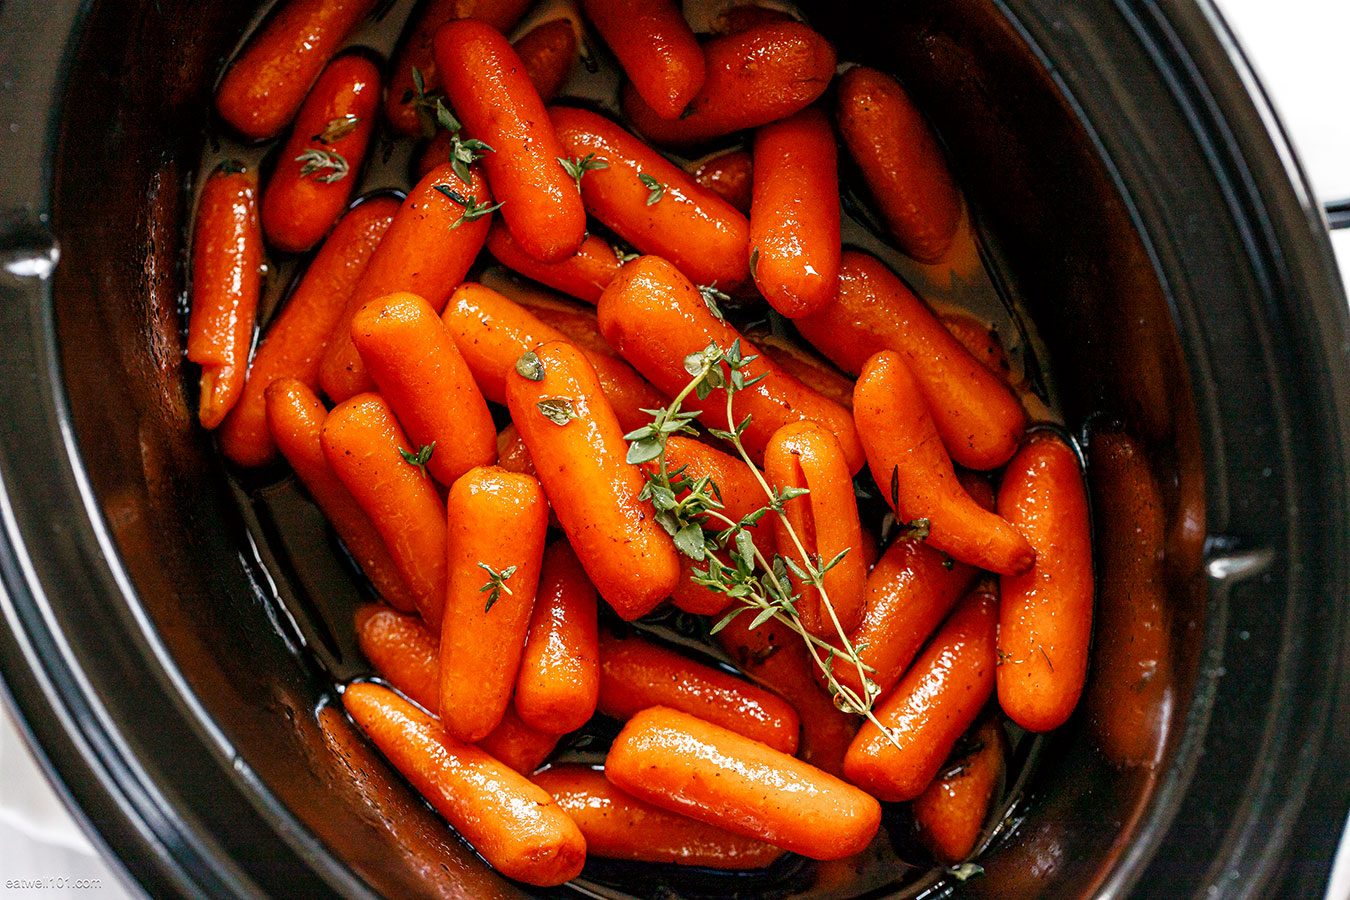 Crockpot Carrots {Easy Slow Cooker Recipe} –